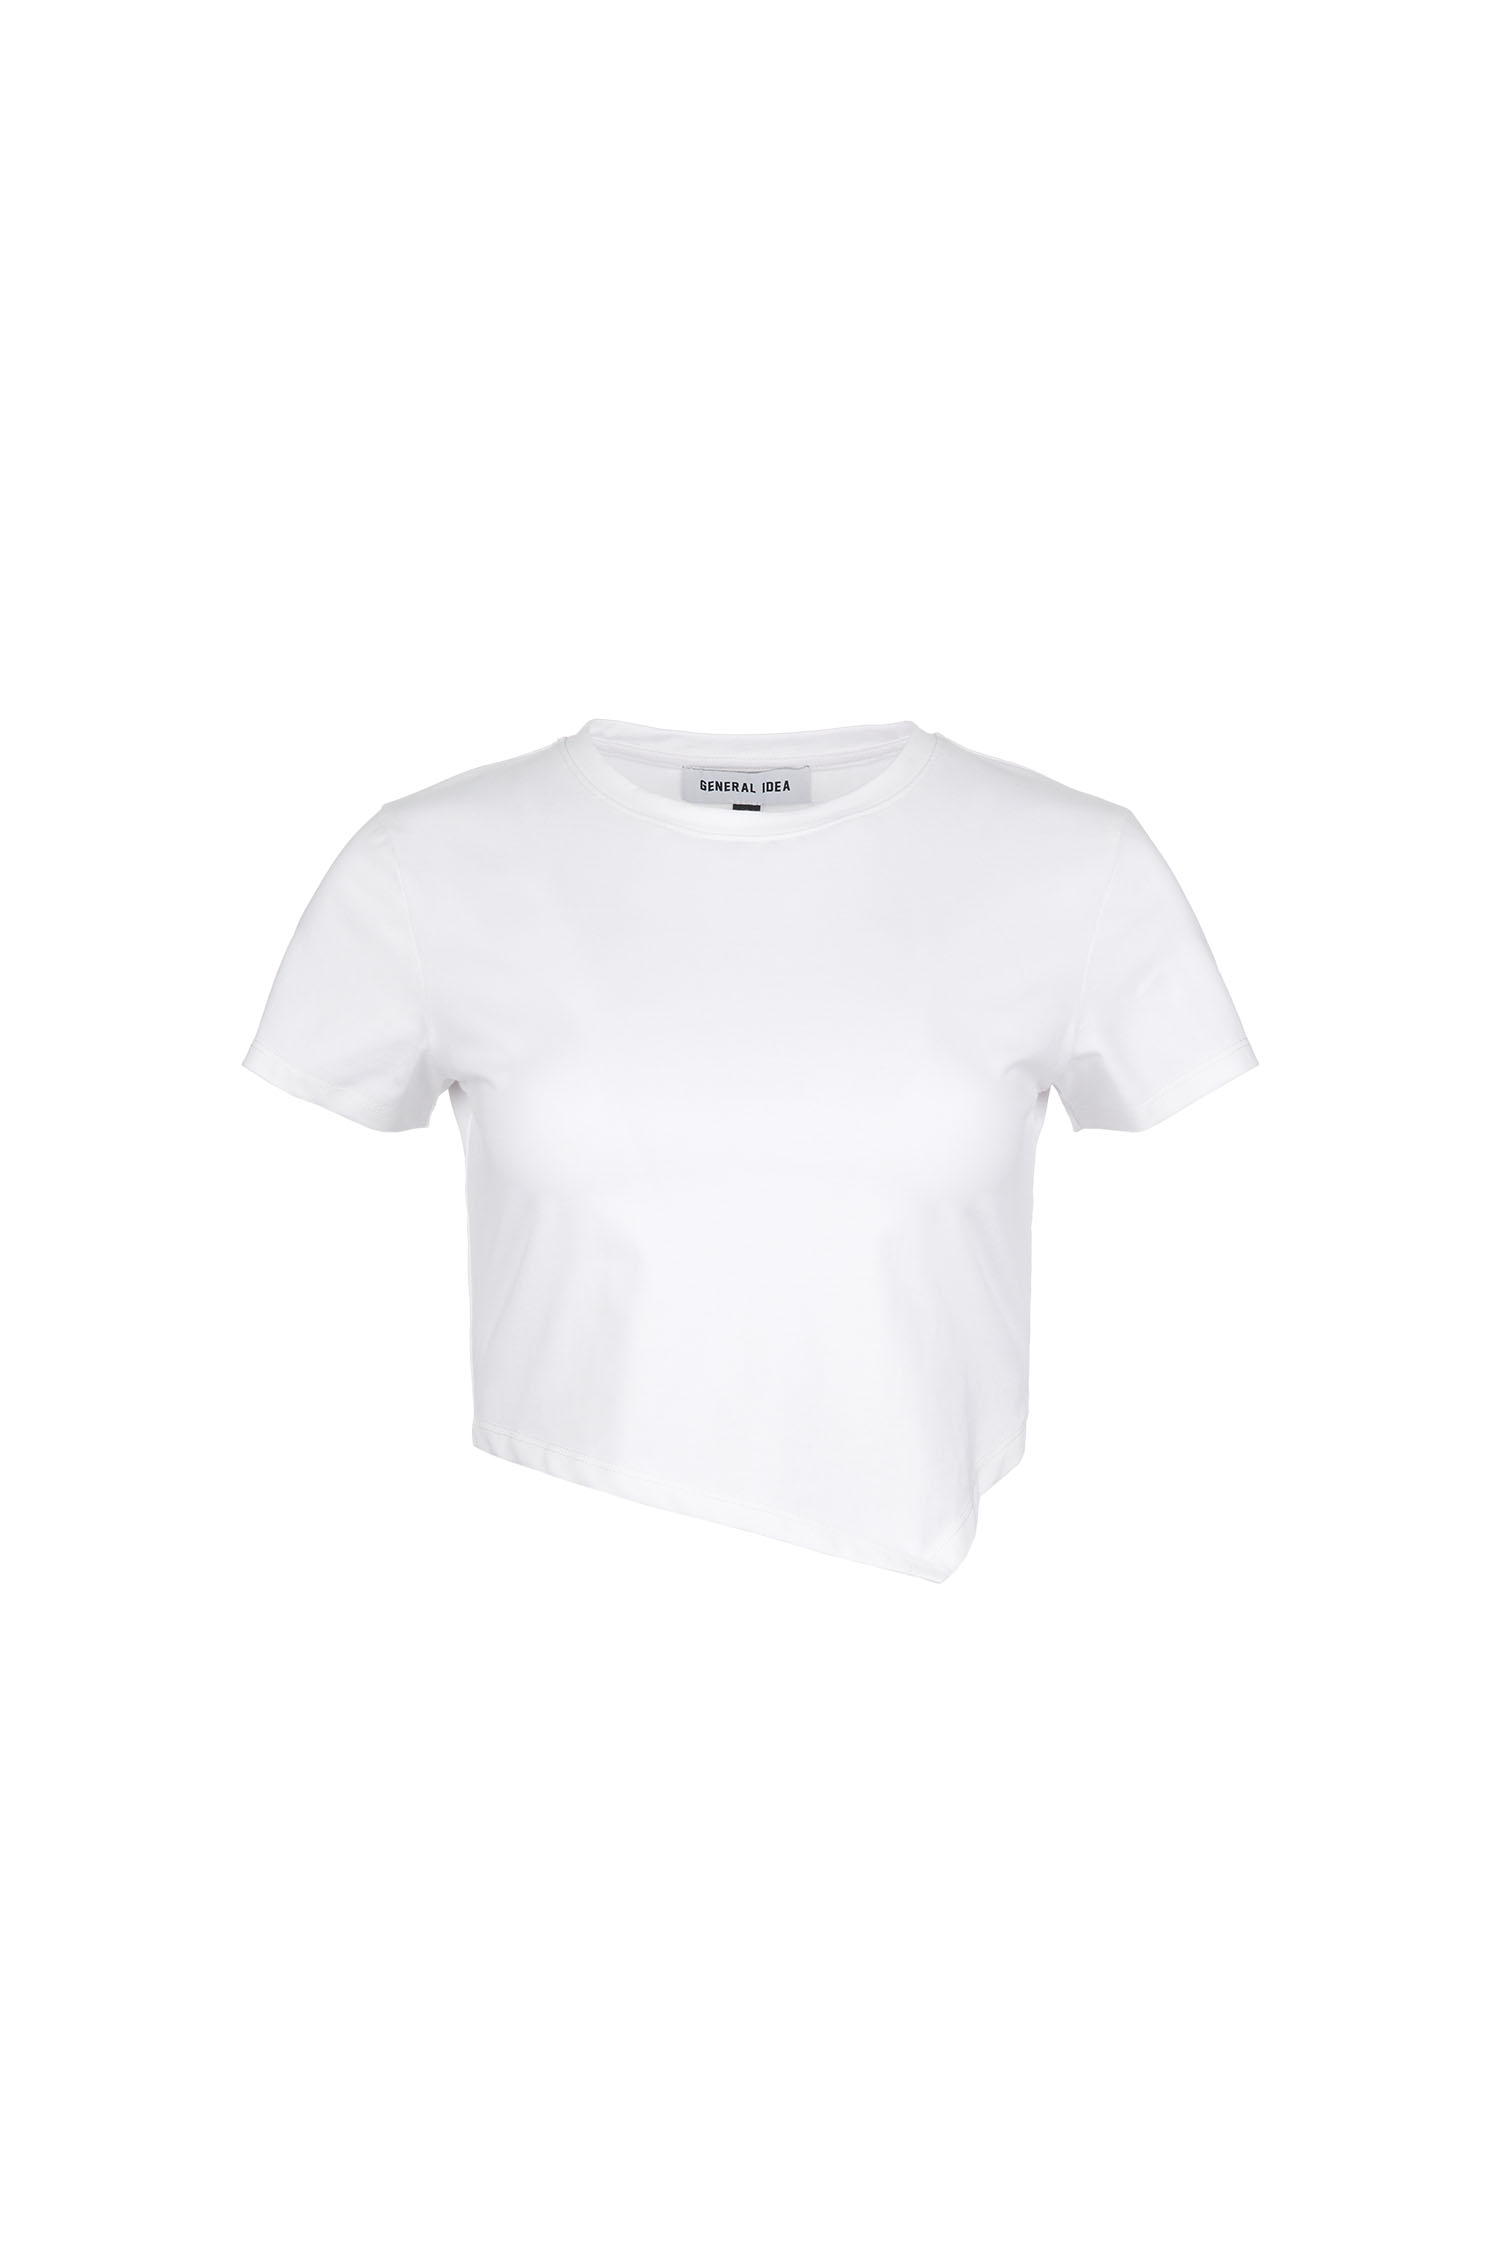 WOMAN アンバランス シルケット クロップTシャツ [WHITE]